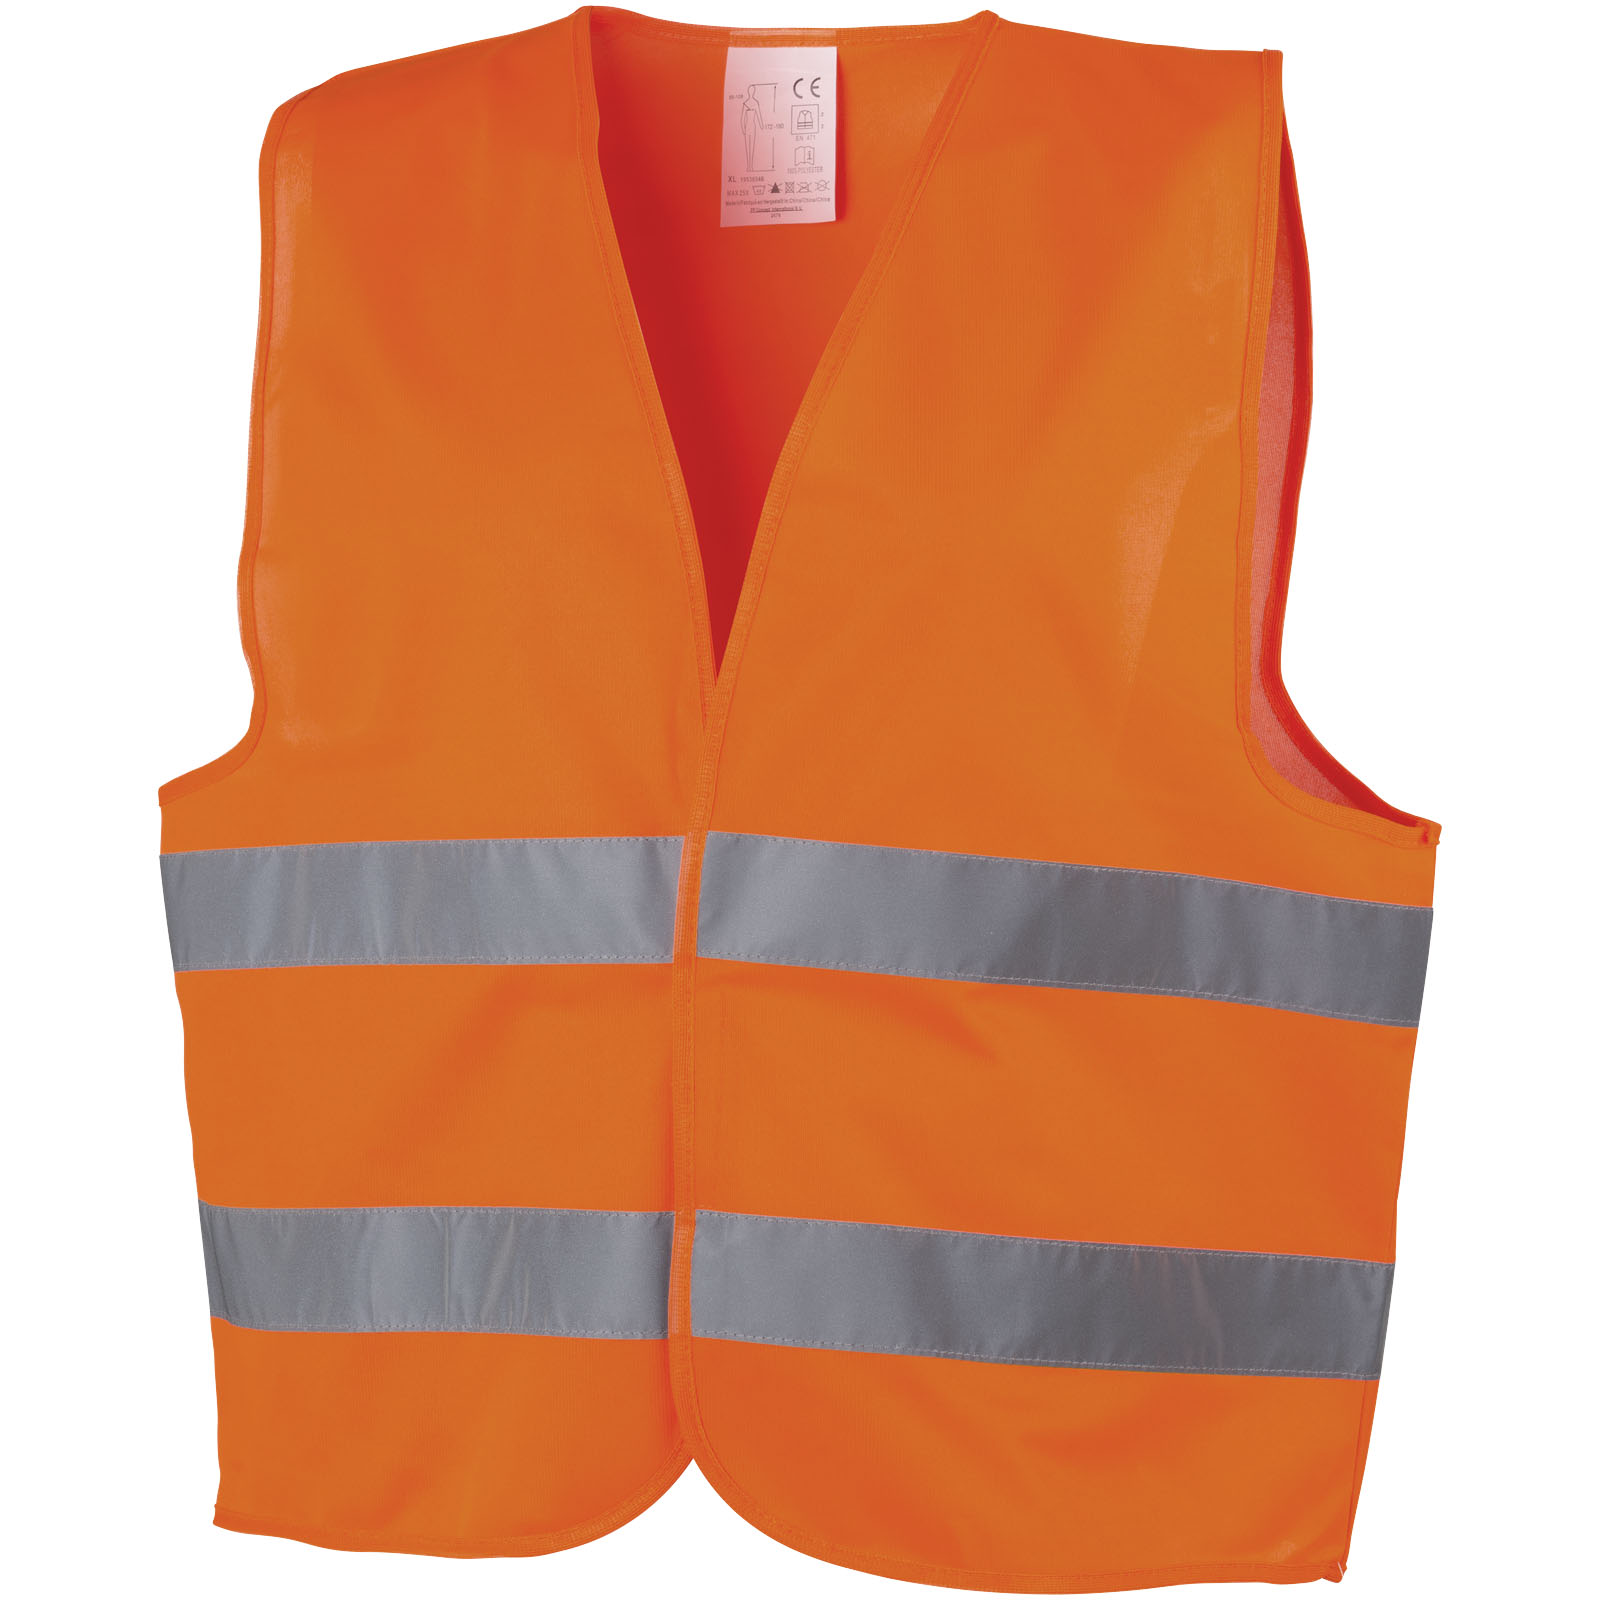 Safety Vests - RFX™ See-me XL safety vest for professional use